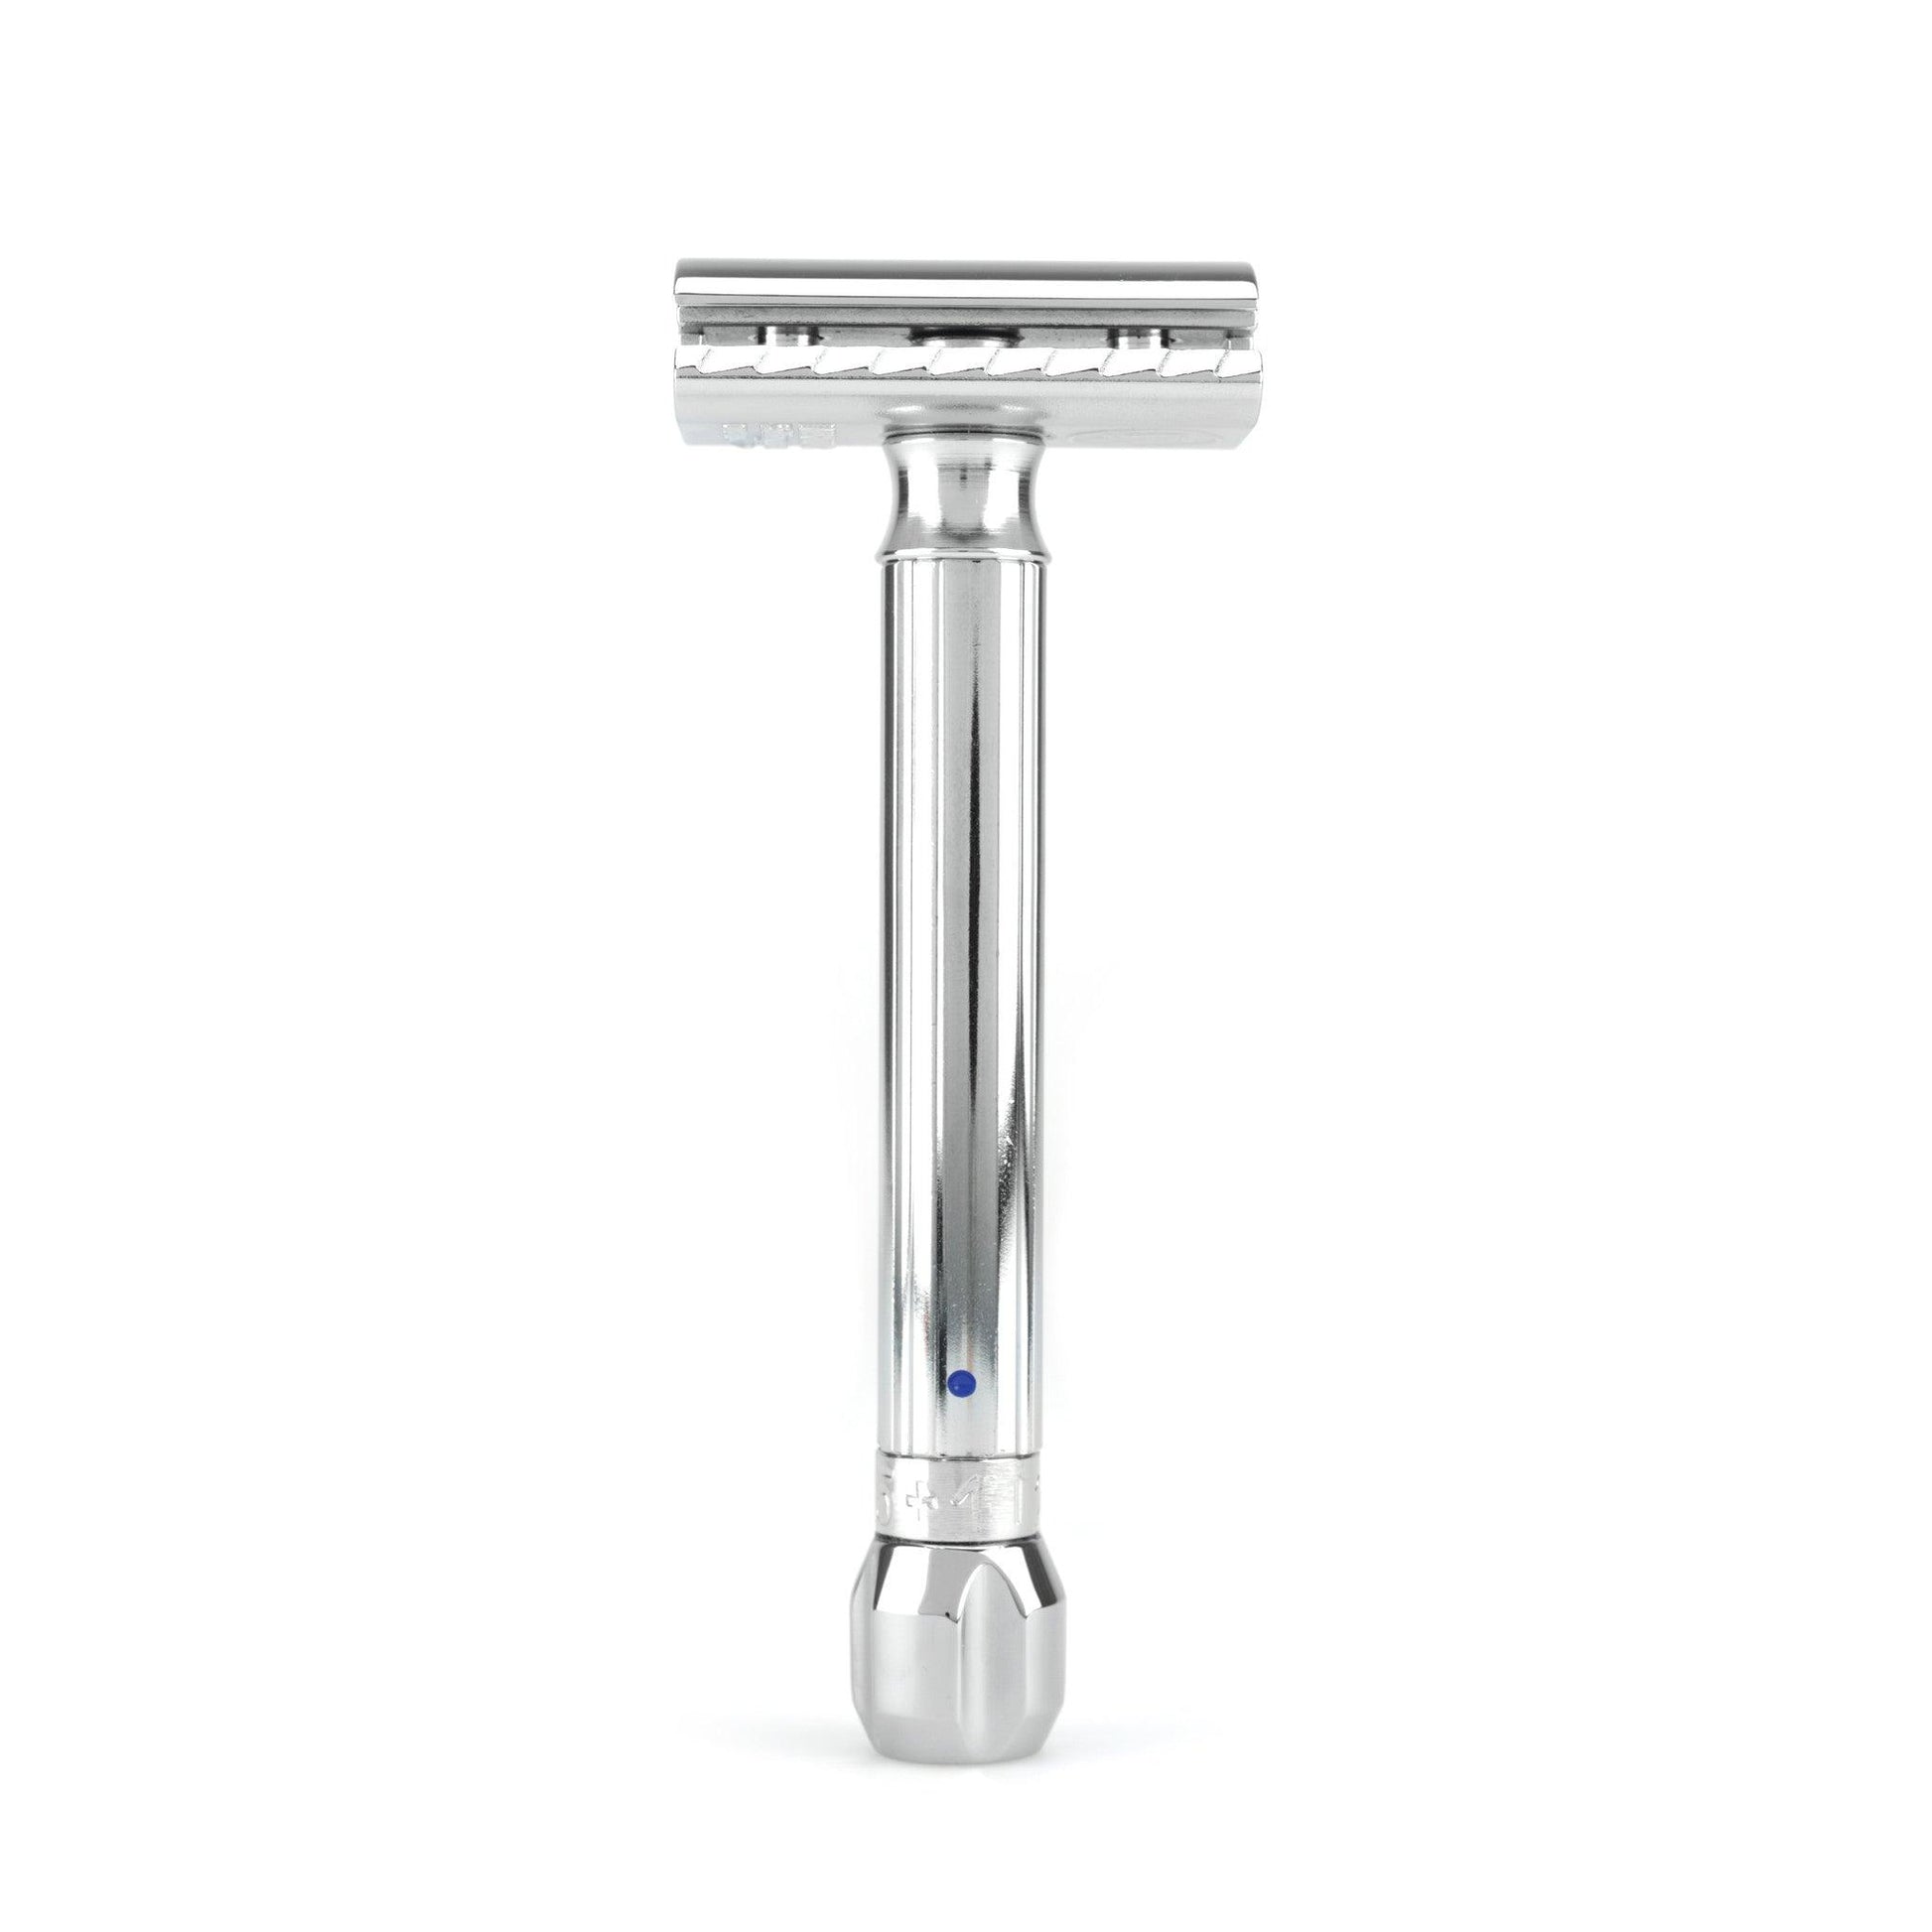 Shaving razors (4 photos) - Photography and Web Design - Los Angeles, US based Shopify Experts Revo Designs